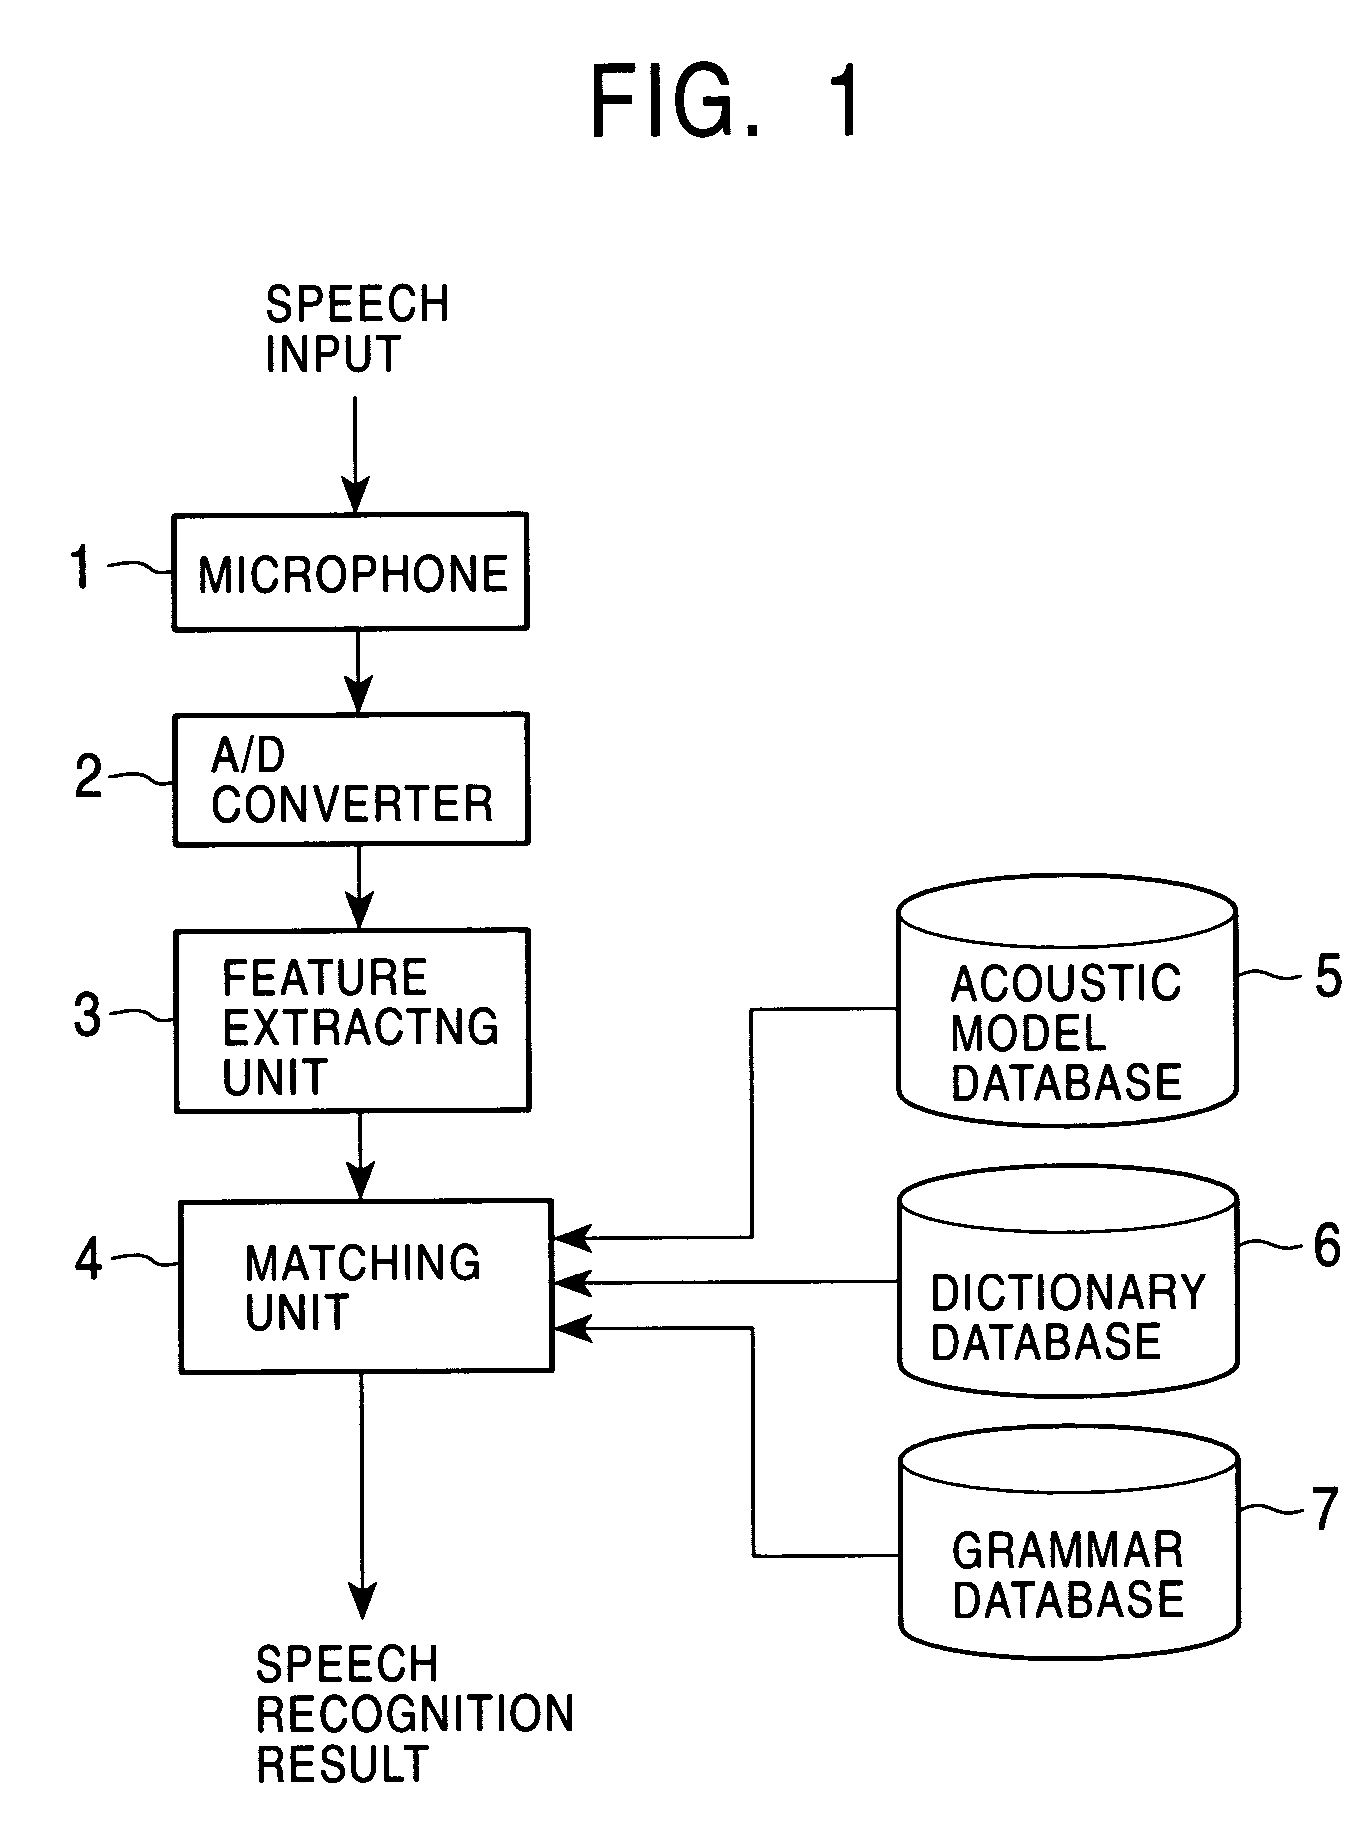 Speech recognition apparatus